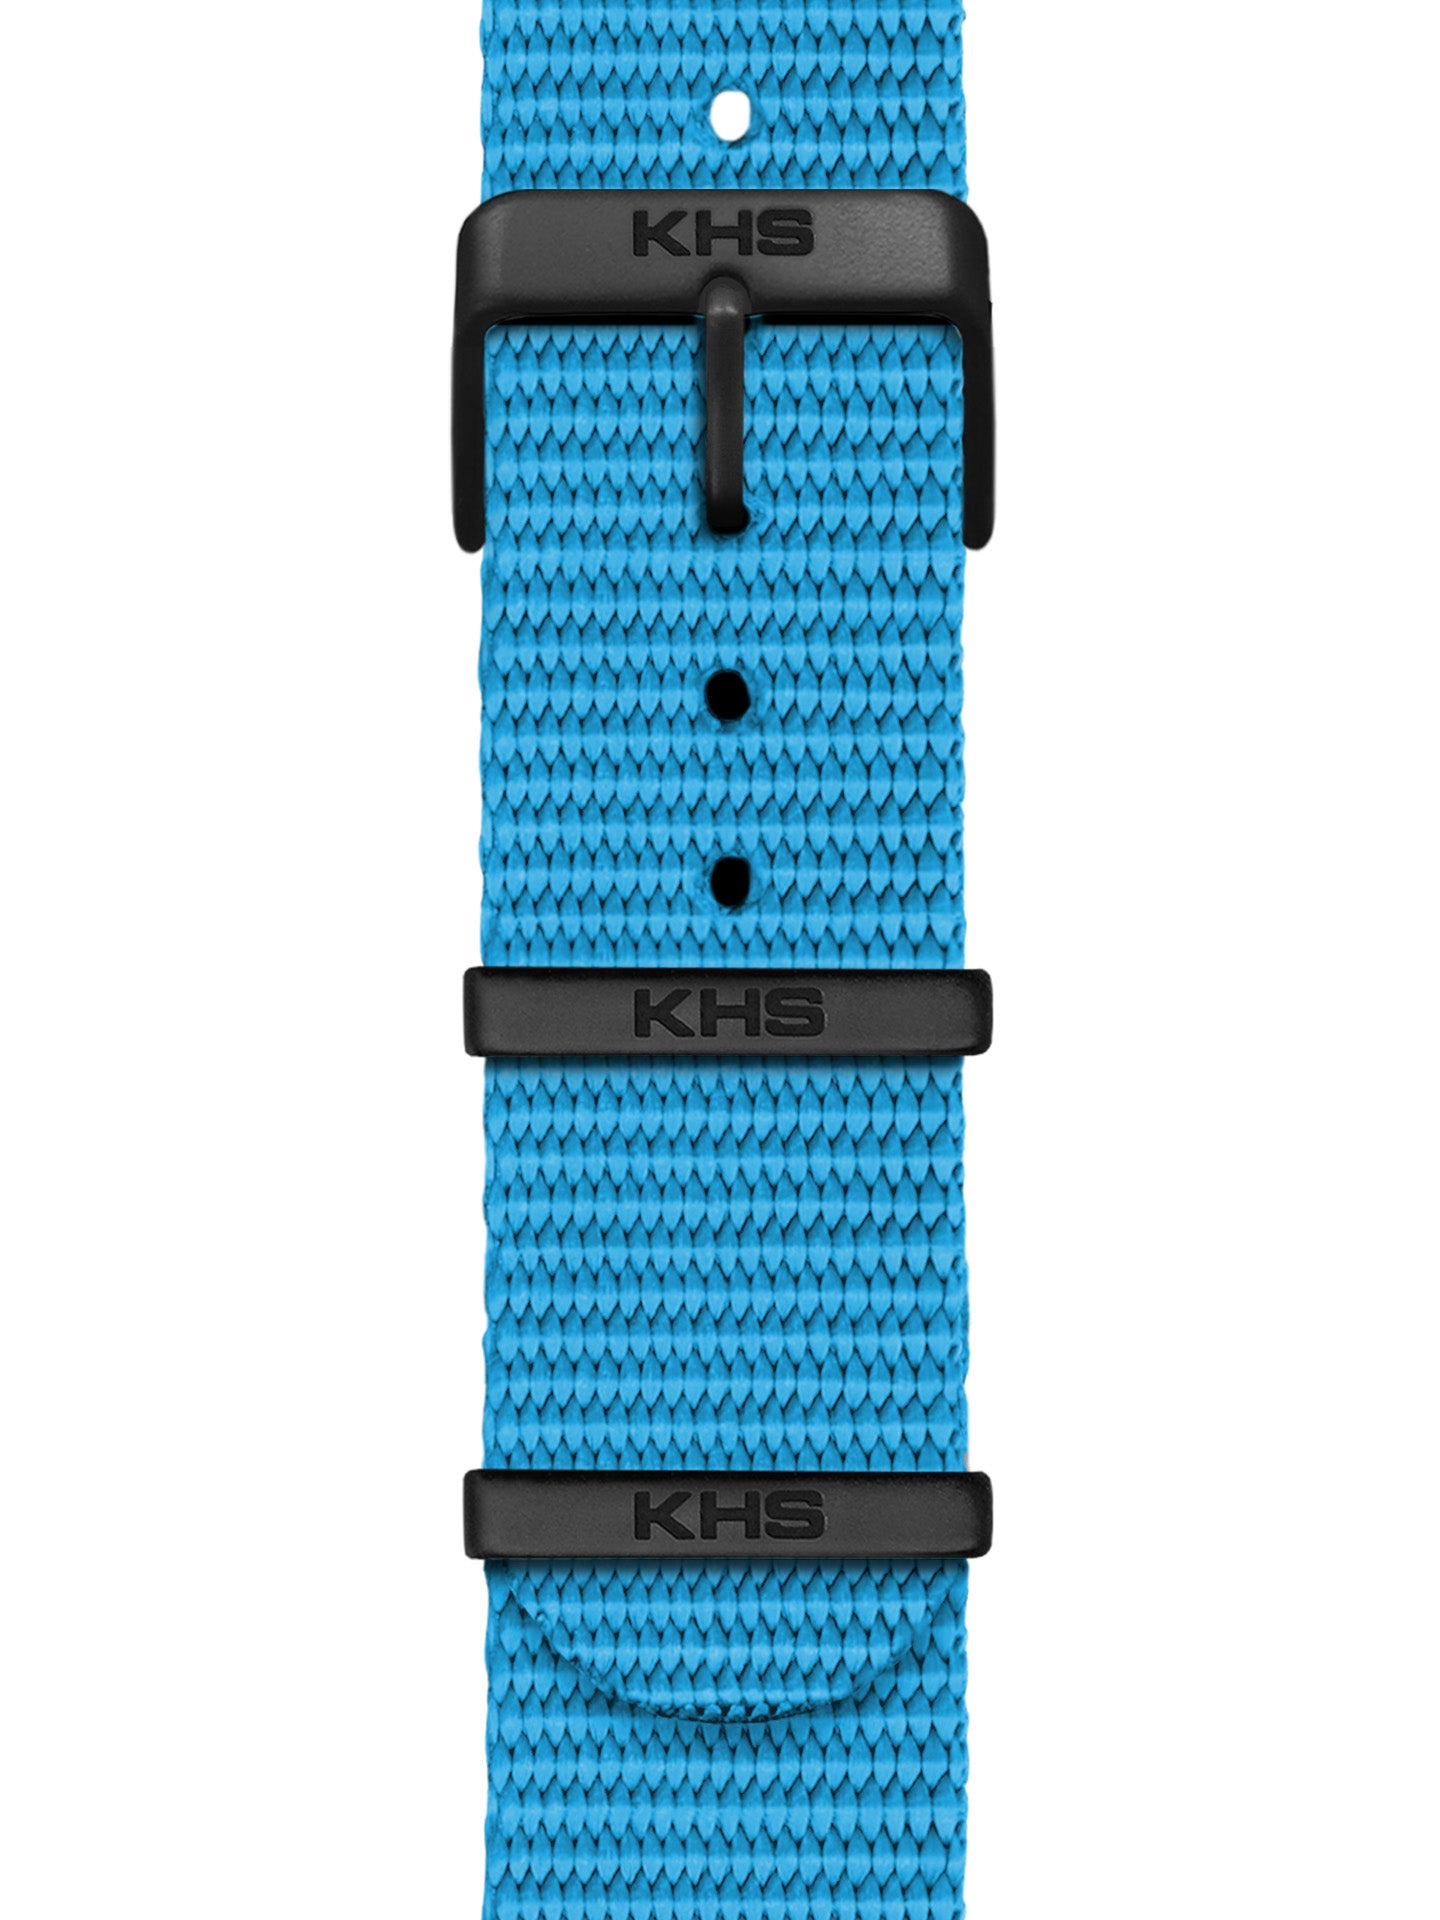 Natoband Blau 22mm